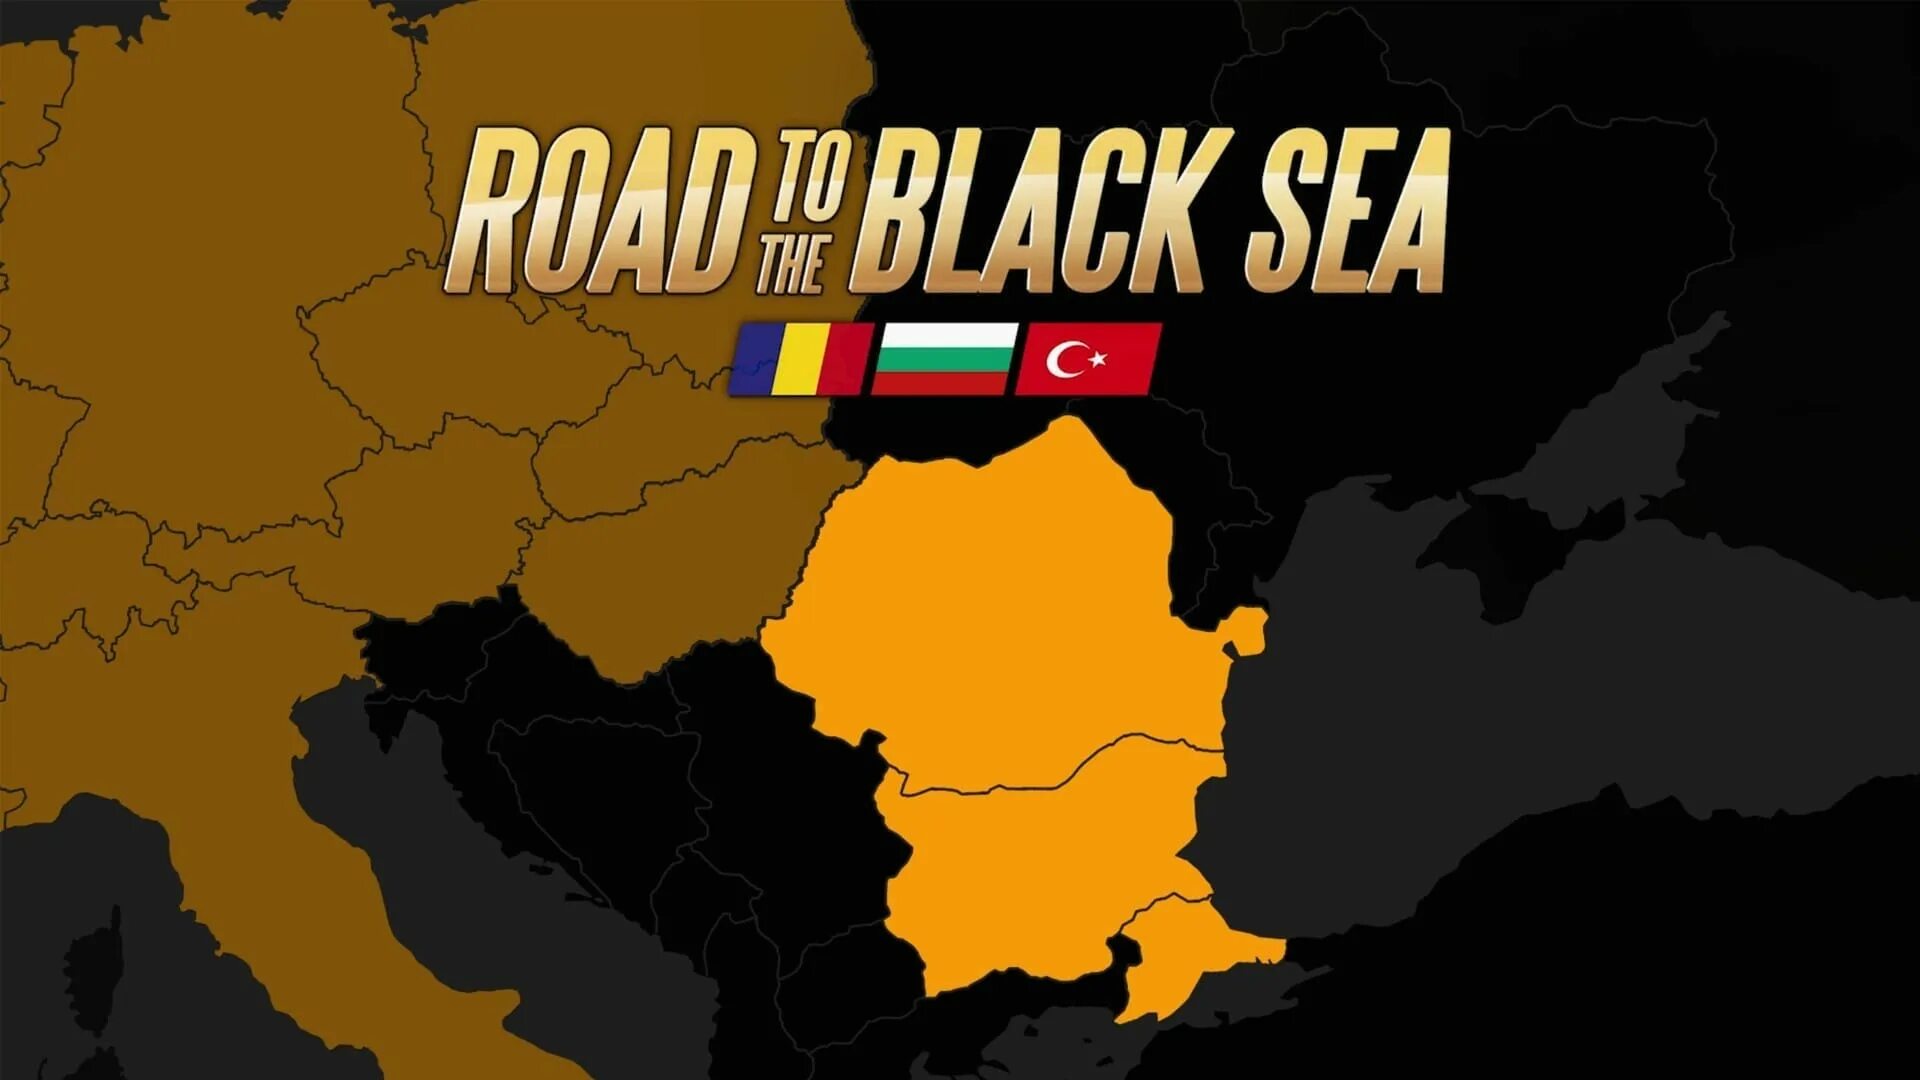 Игры черное море. Дорога к черному морю етс 2. Euro Truck Simulator 2 Road to the Black Sea карта. Road to the Black Sea ETS 2. ETS 2 Road to the Black Sea карта.